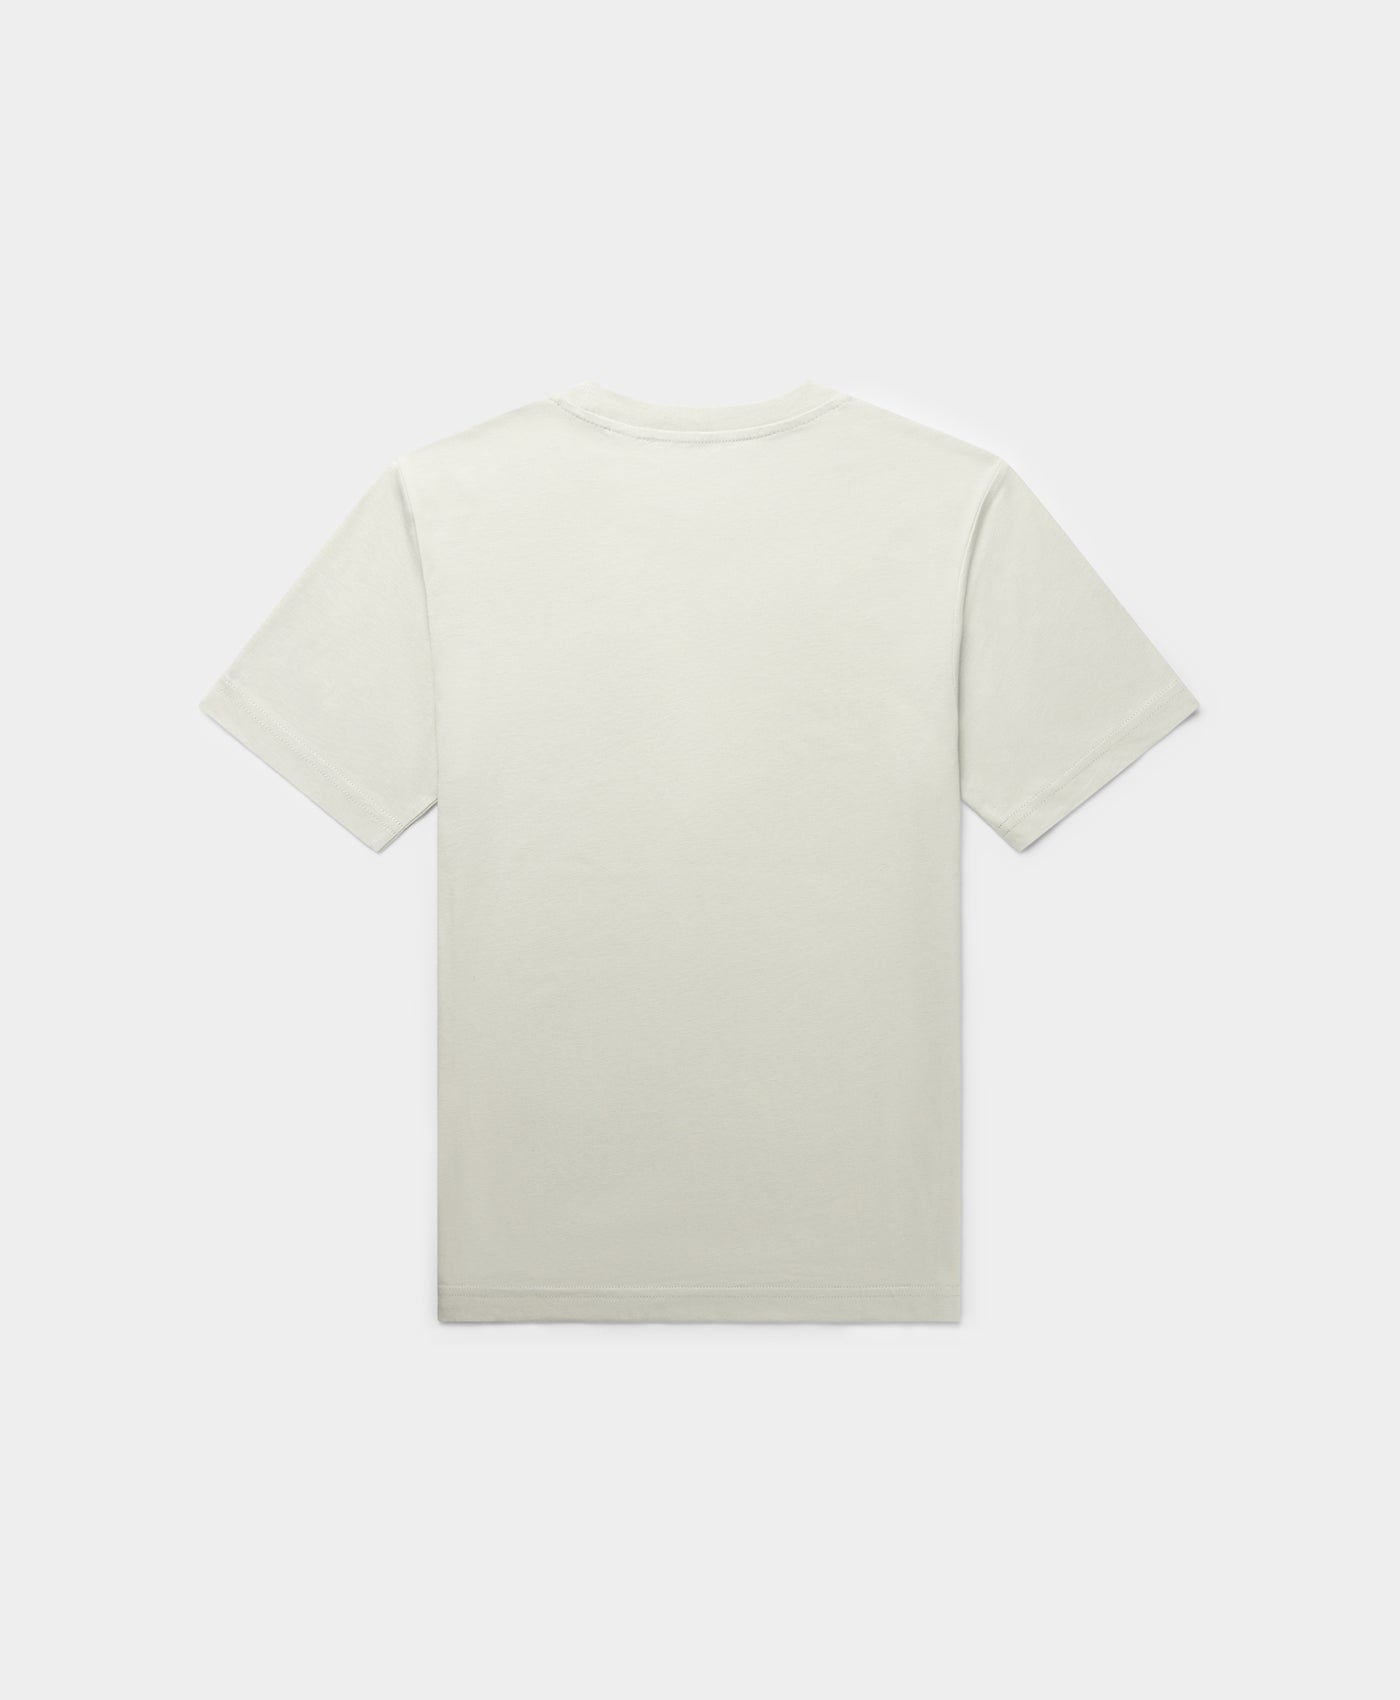 DP - Metal Grey Esy T-Shirt - Packshot - Rear